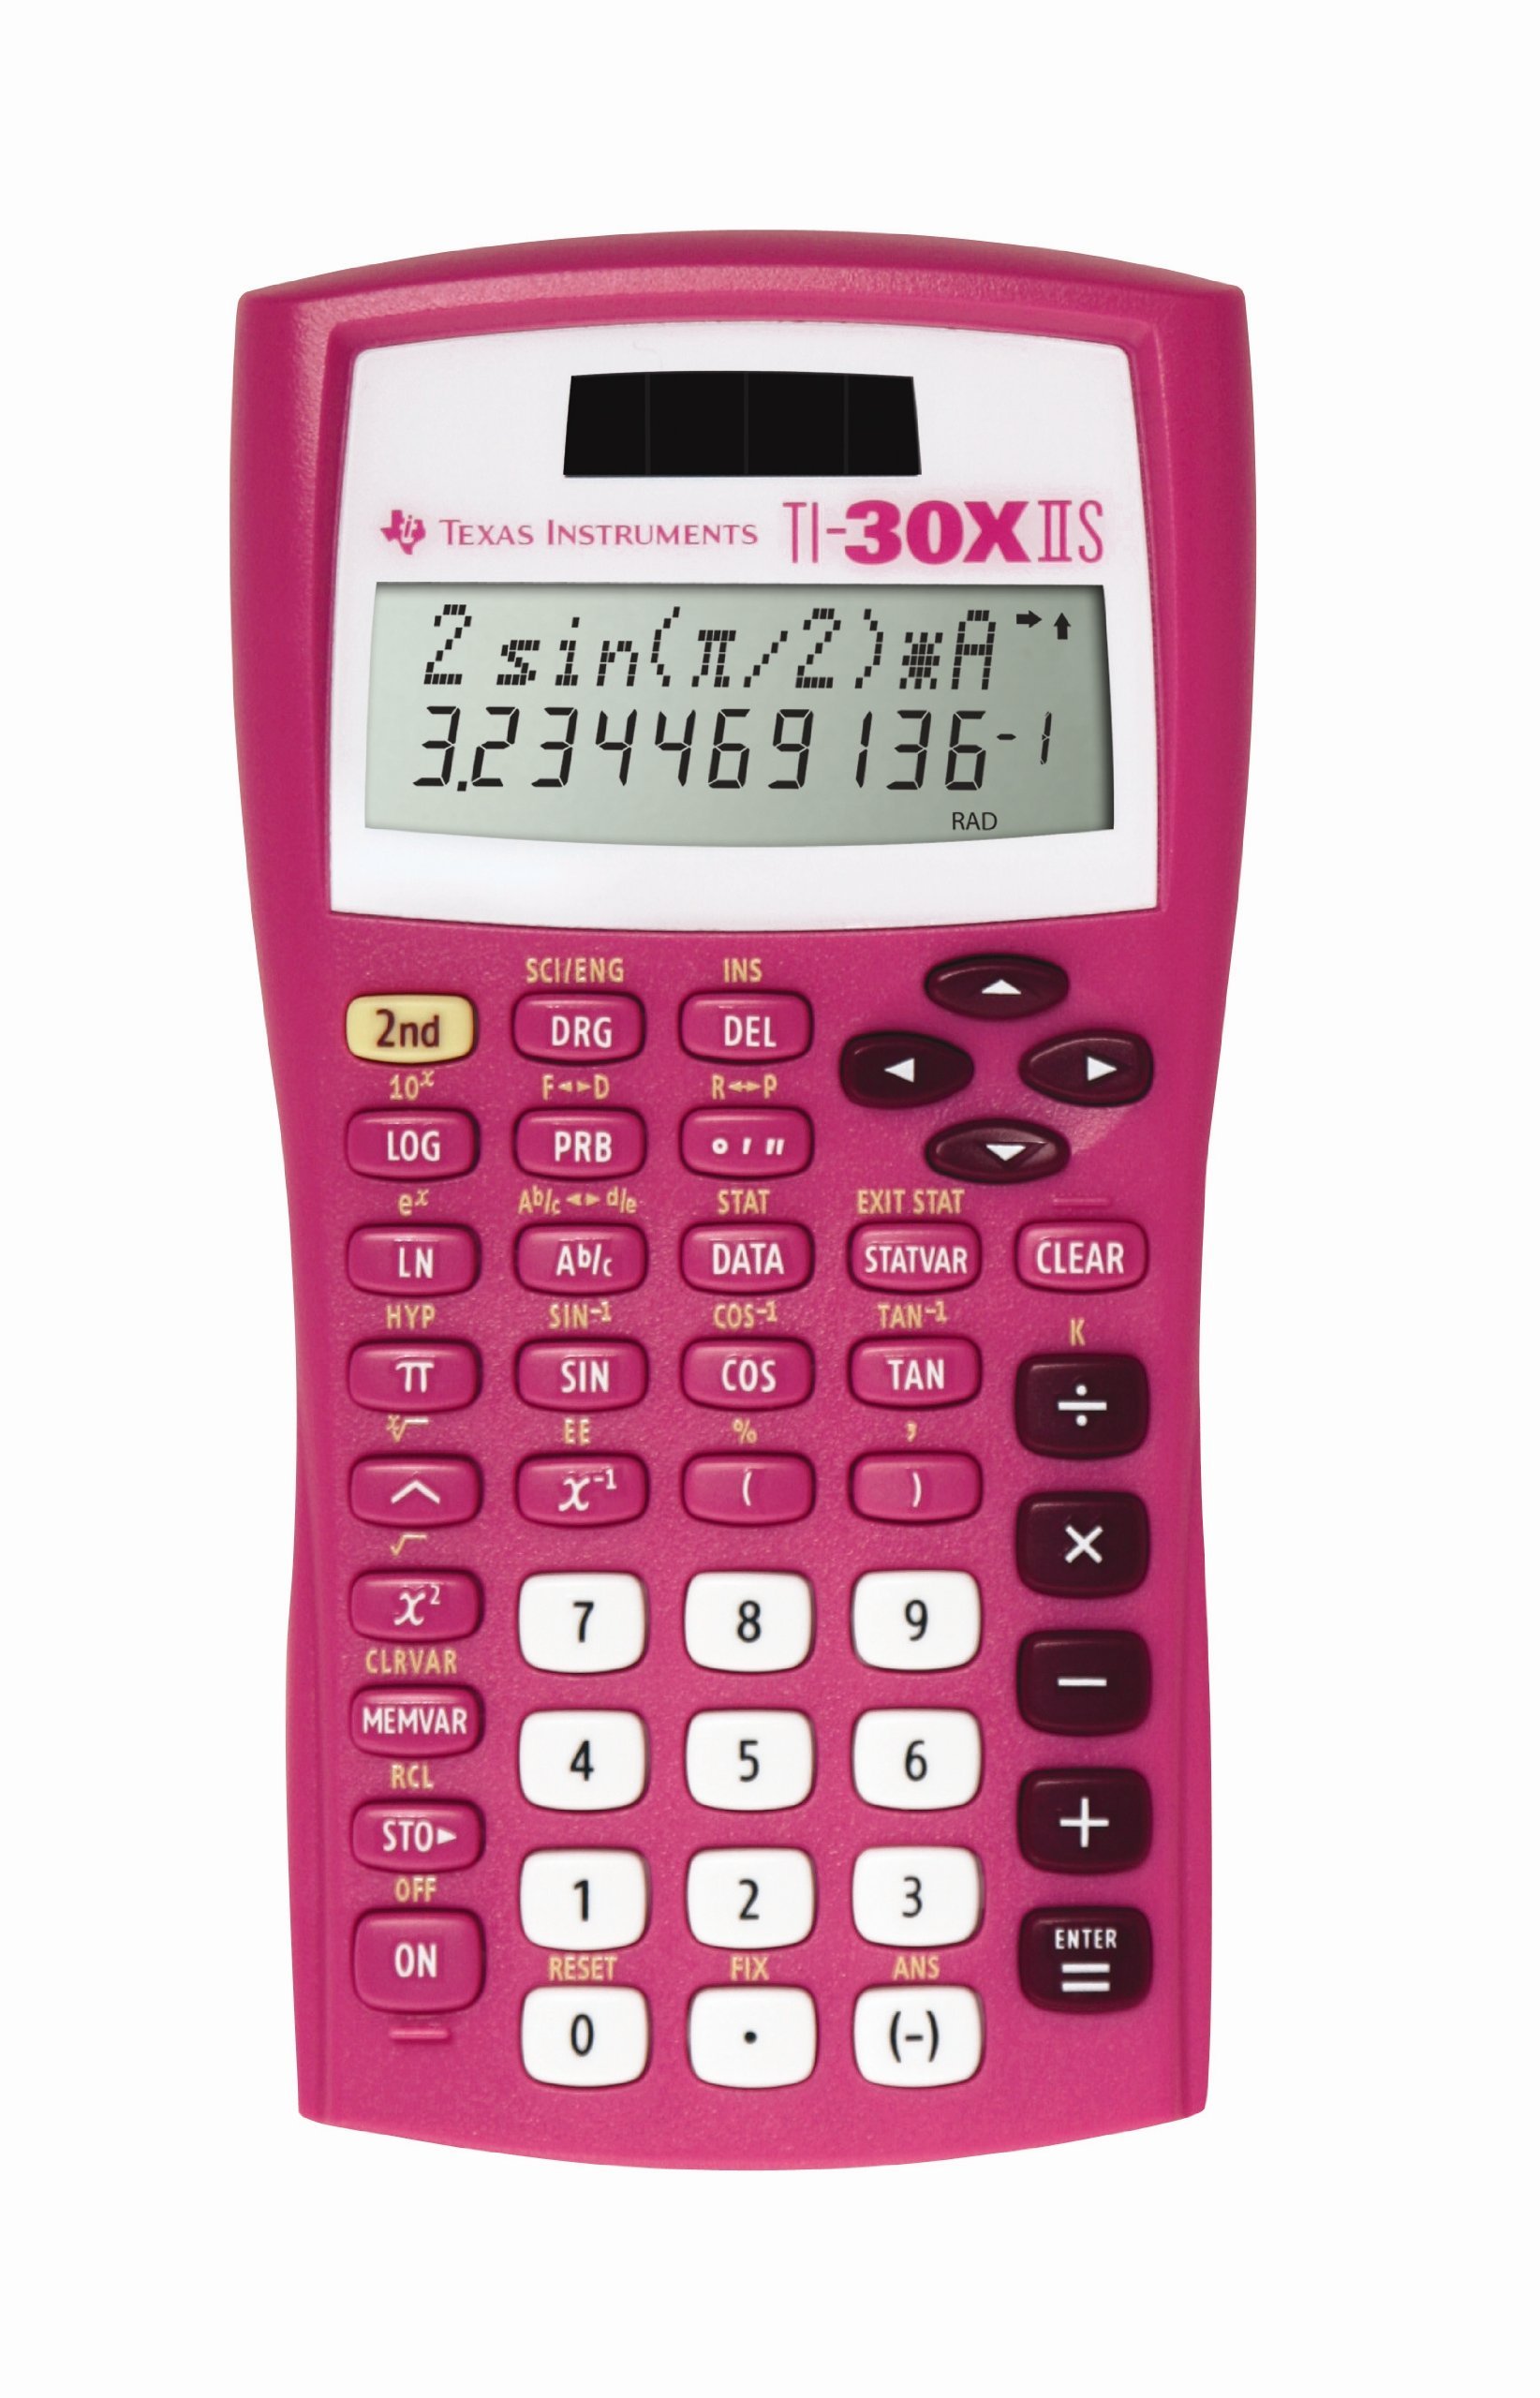 Texas Instruments TI-30X IIS 2-Line Scientific Calculator, Pink (Renewed)